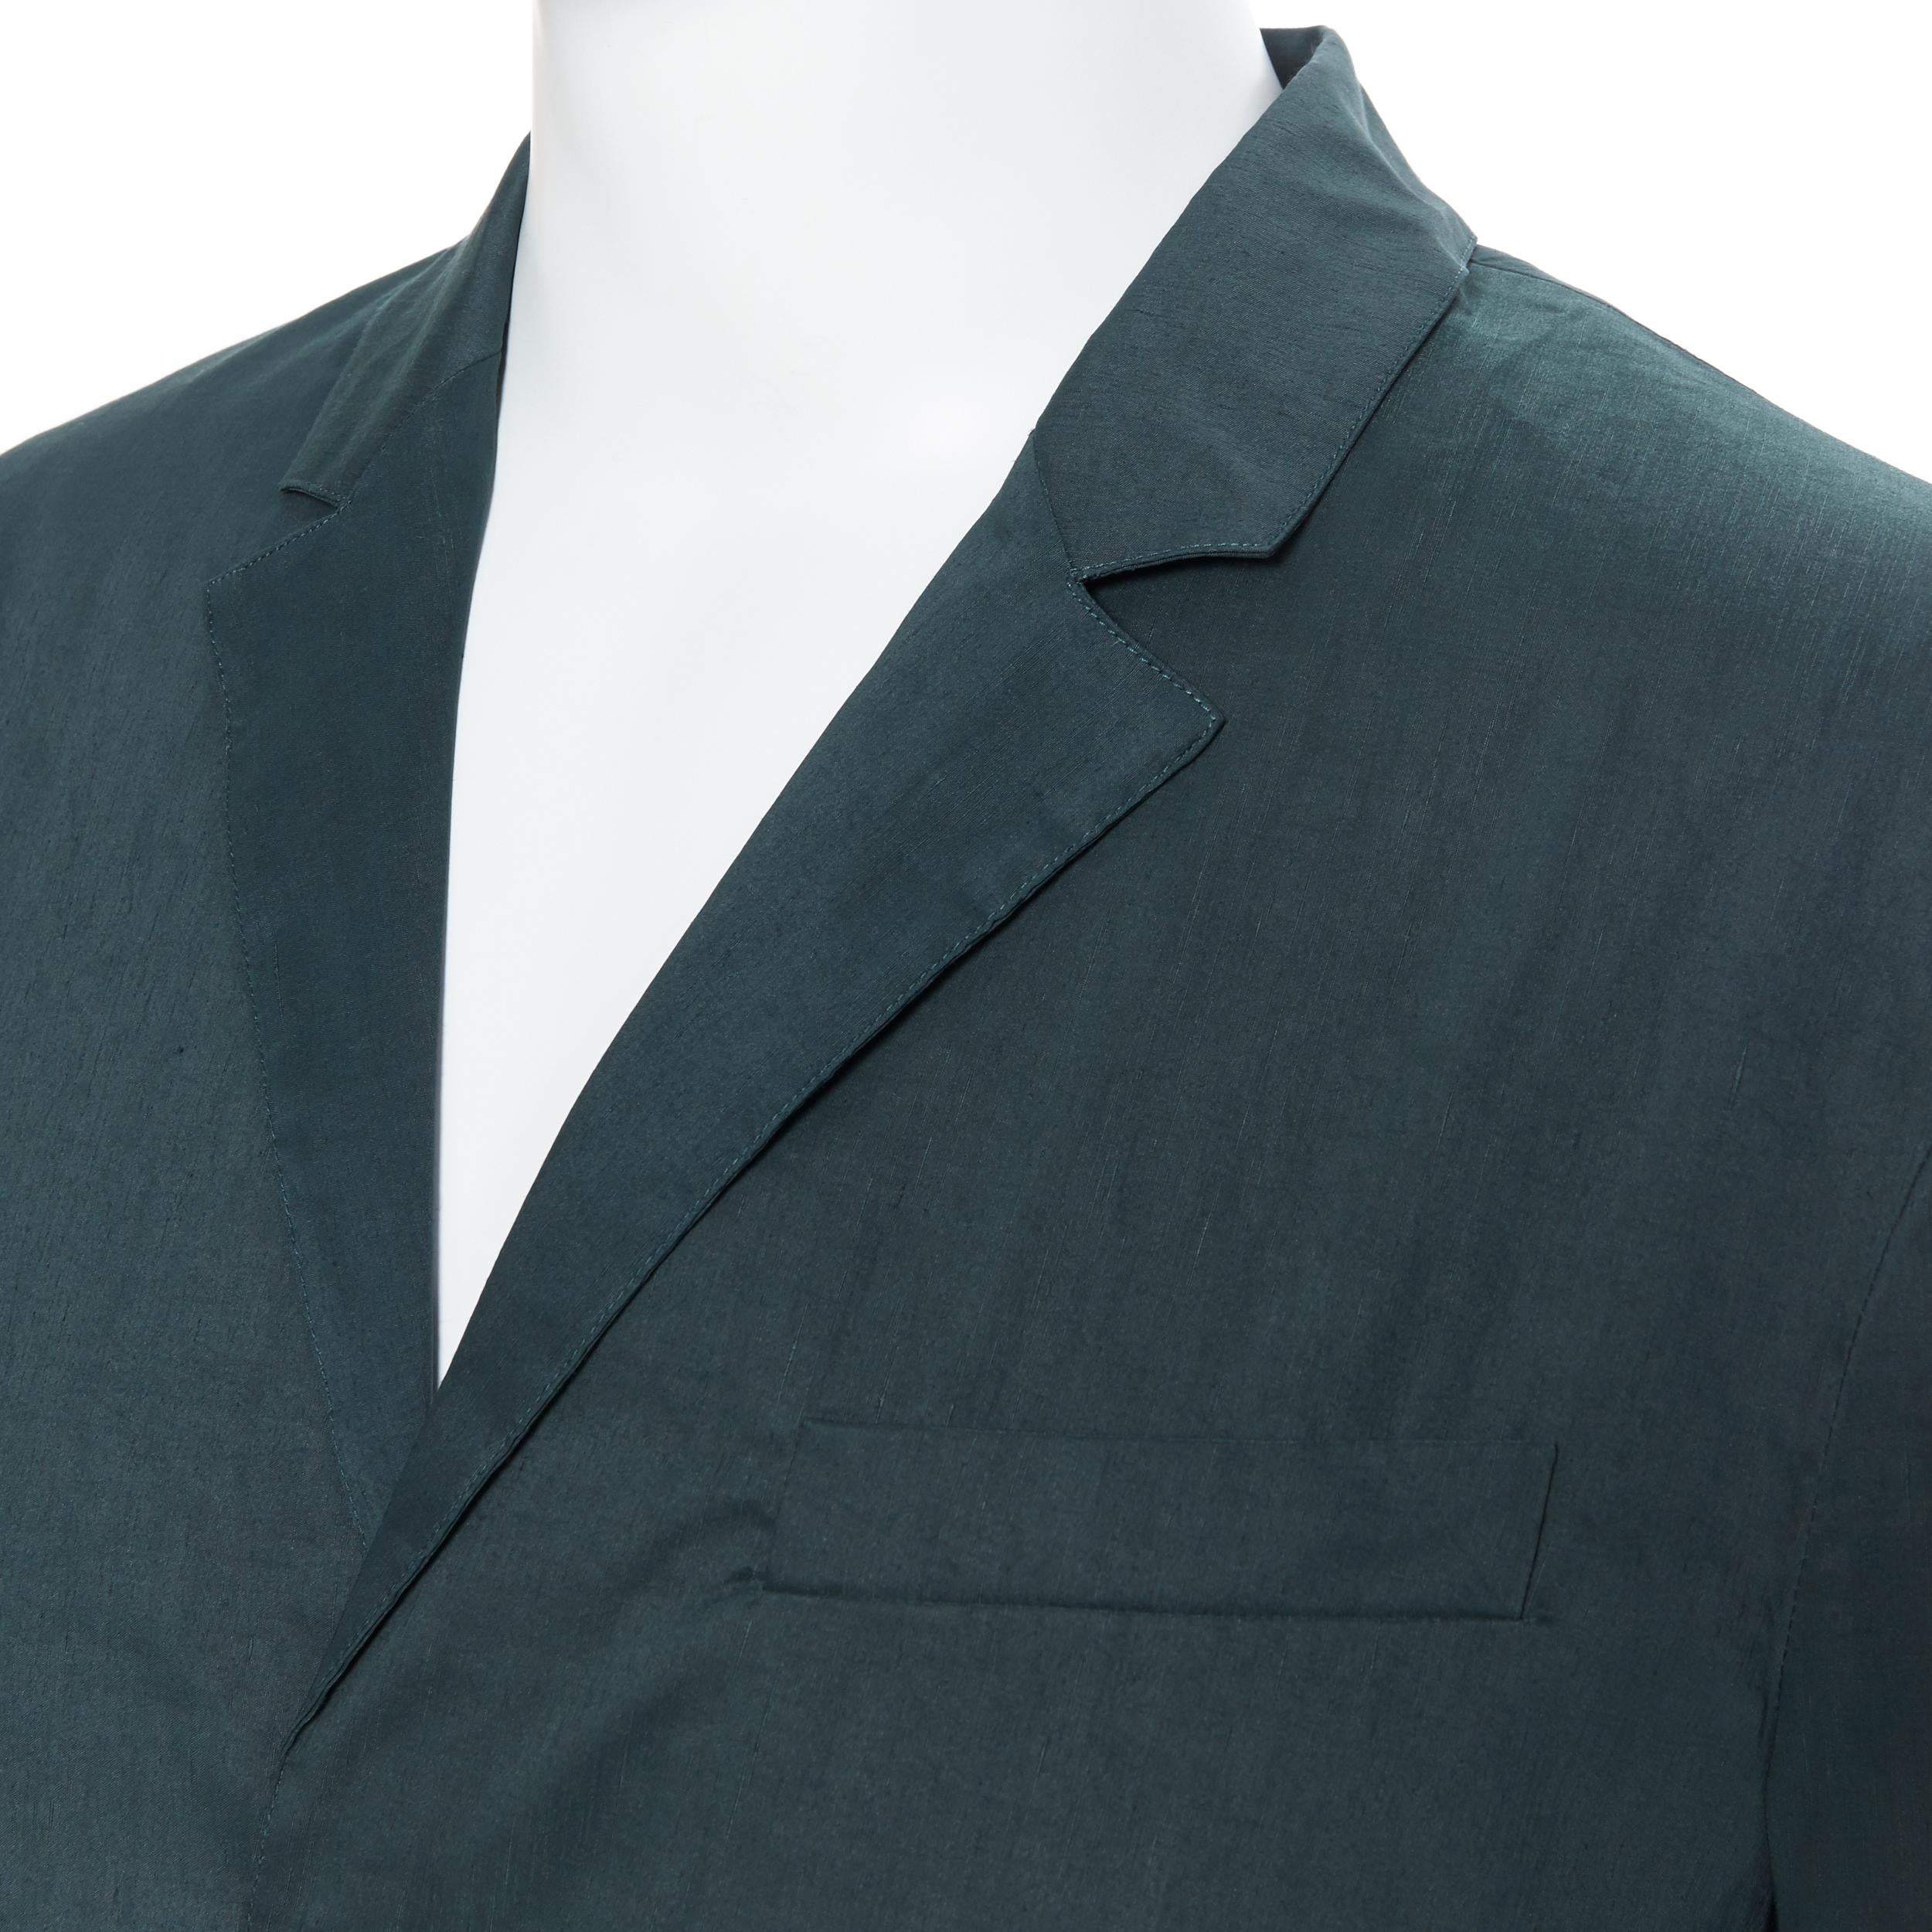 new LA PERLA dark green linen blend notched collar button front pyjama shirt XL
Brand: La Perla
Model Name / Style: Linen shirt
Material: Linen blend 
Color: Green
Pattern: Solid
Closure: Button
Extra Detail: Long sleeve. Collared neckline. Spread